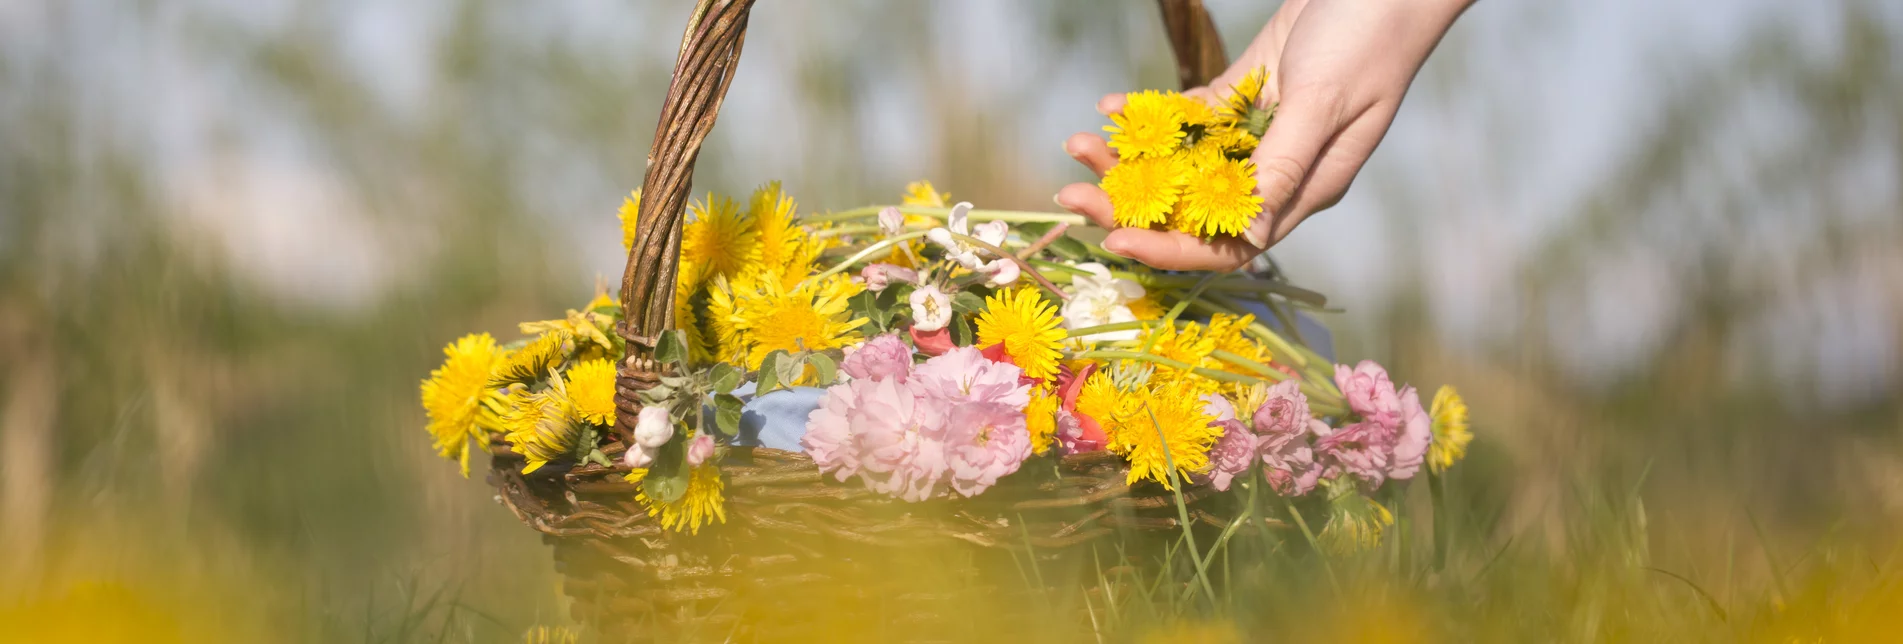 Flower basket with dandelions in eastern Styria | © TV Oststeiermark | Maria Rauchberger